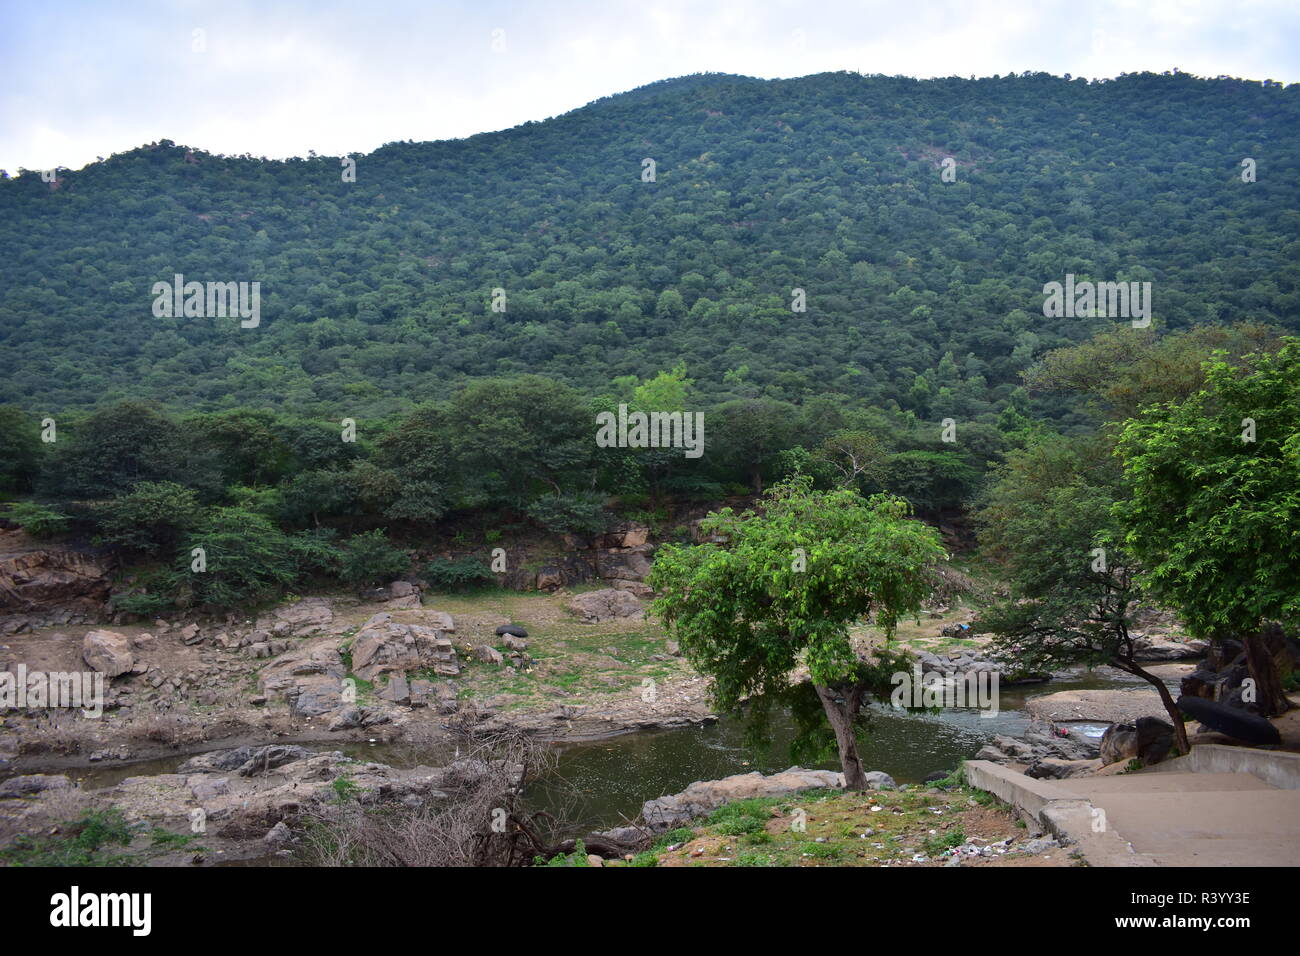 Hogenakkal Falls: A visual treat Stock Photo